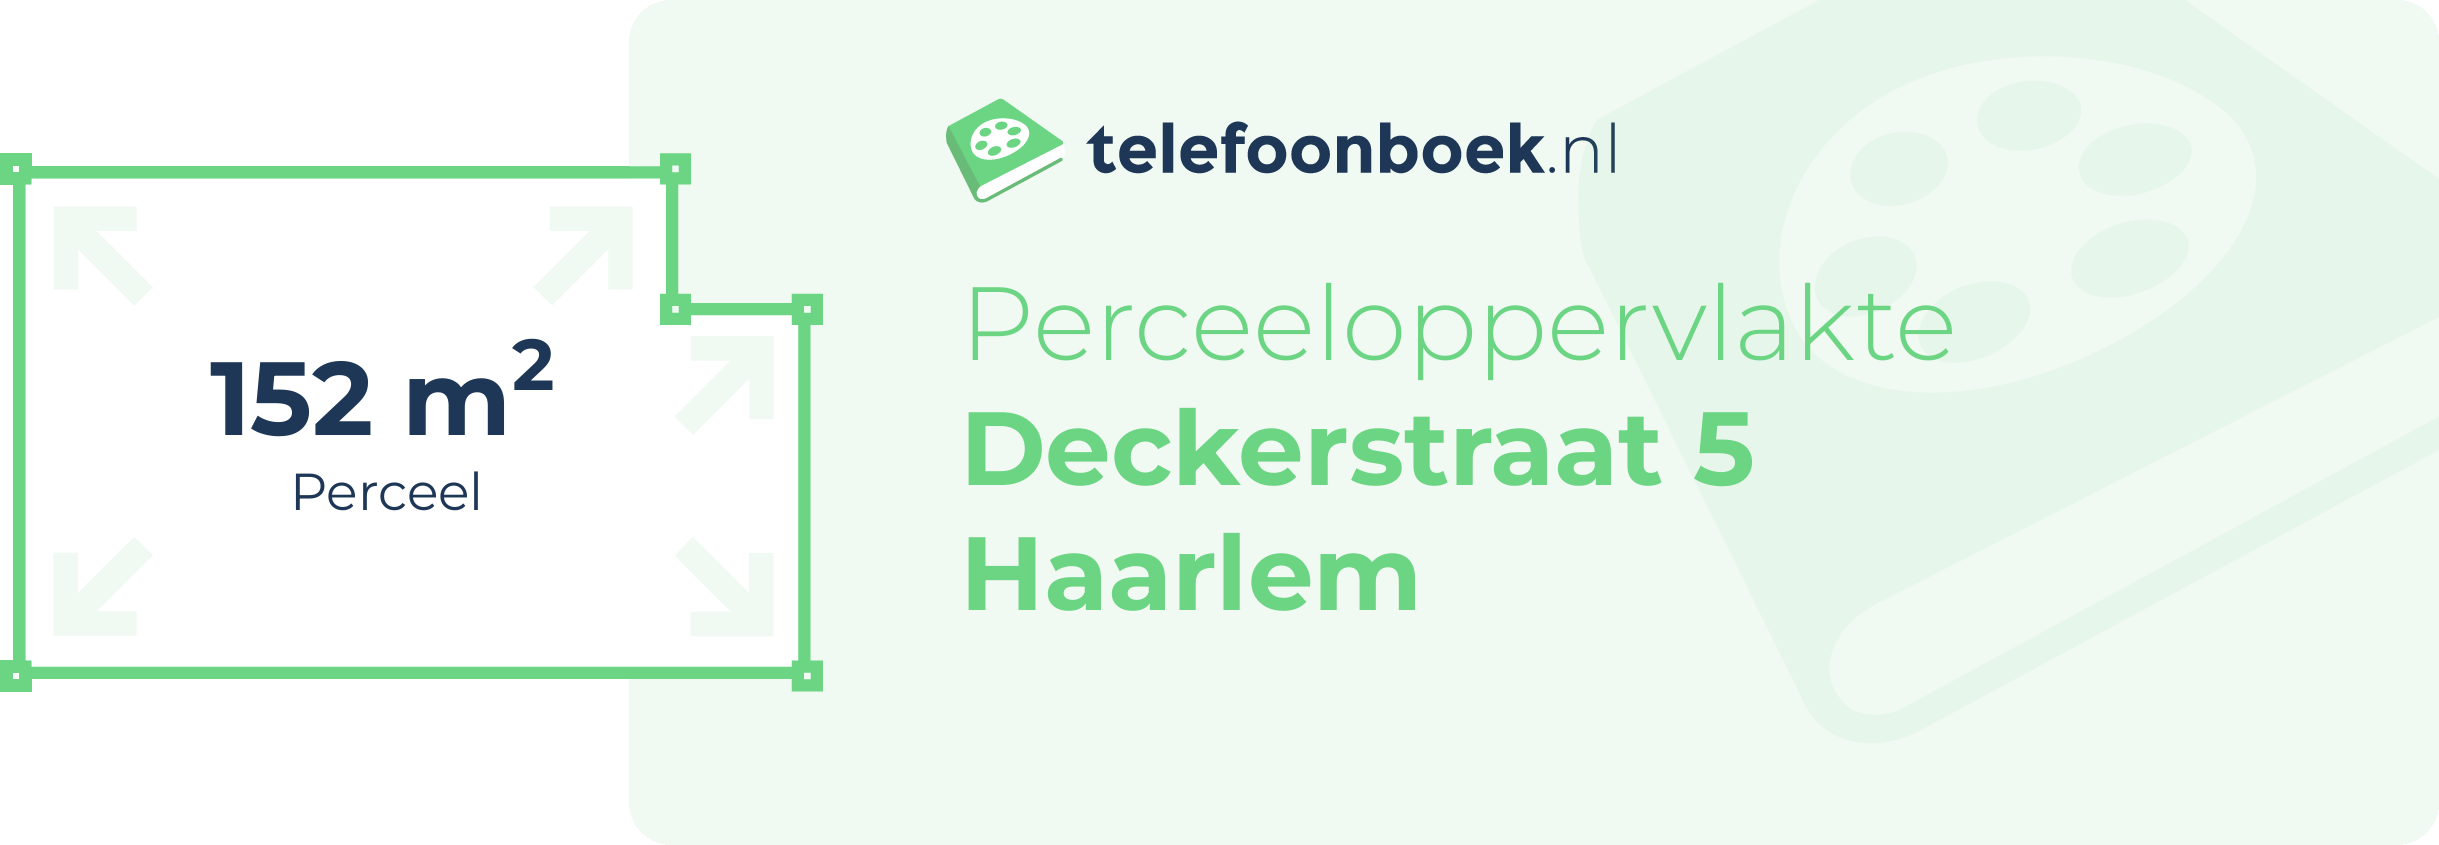 Perceeloppervlakte Deckerstraat 5 Haarlem